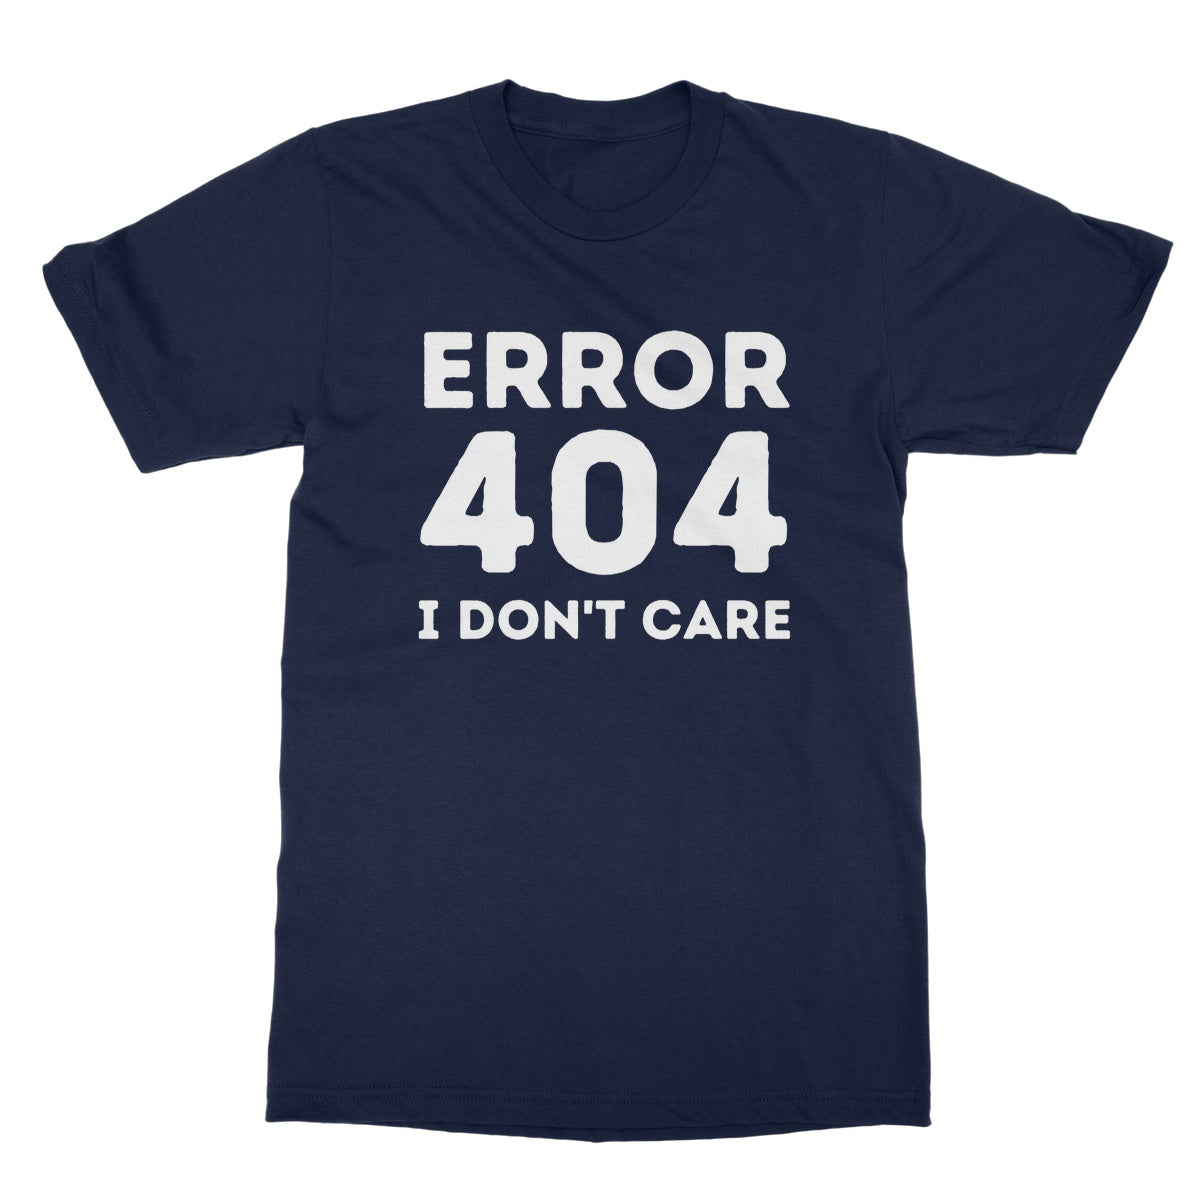 error 404 t shirt navy